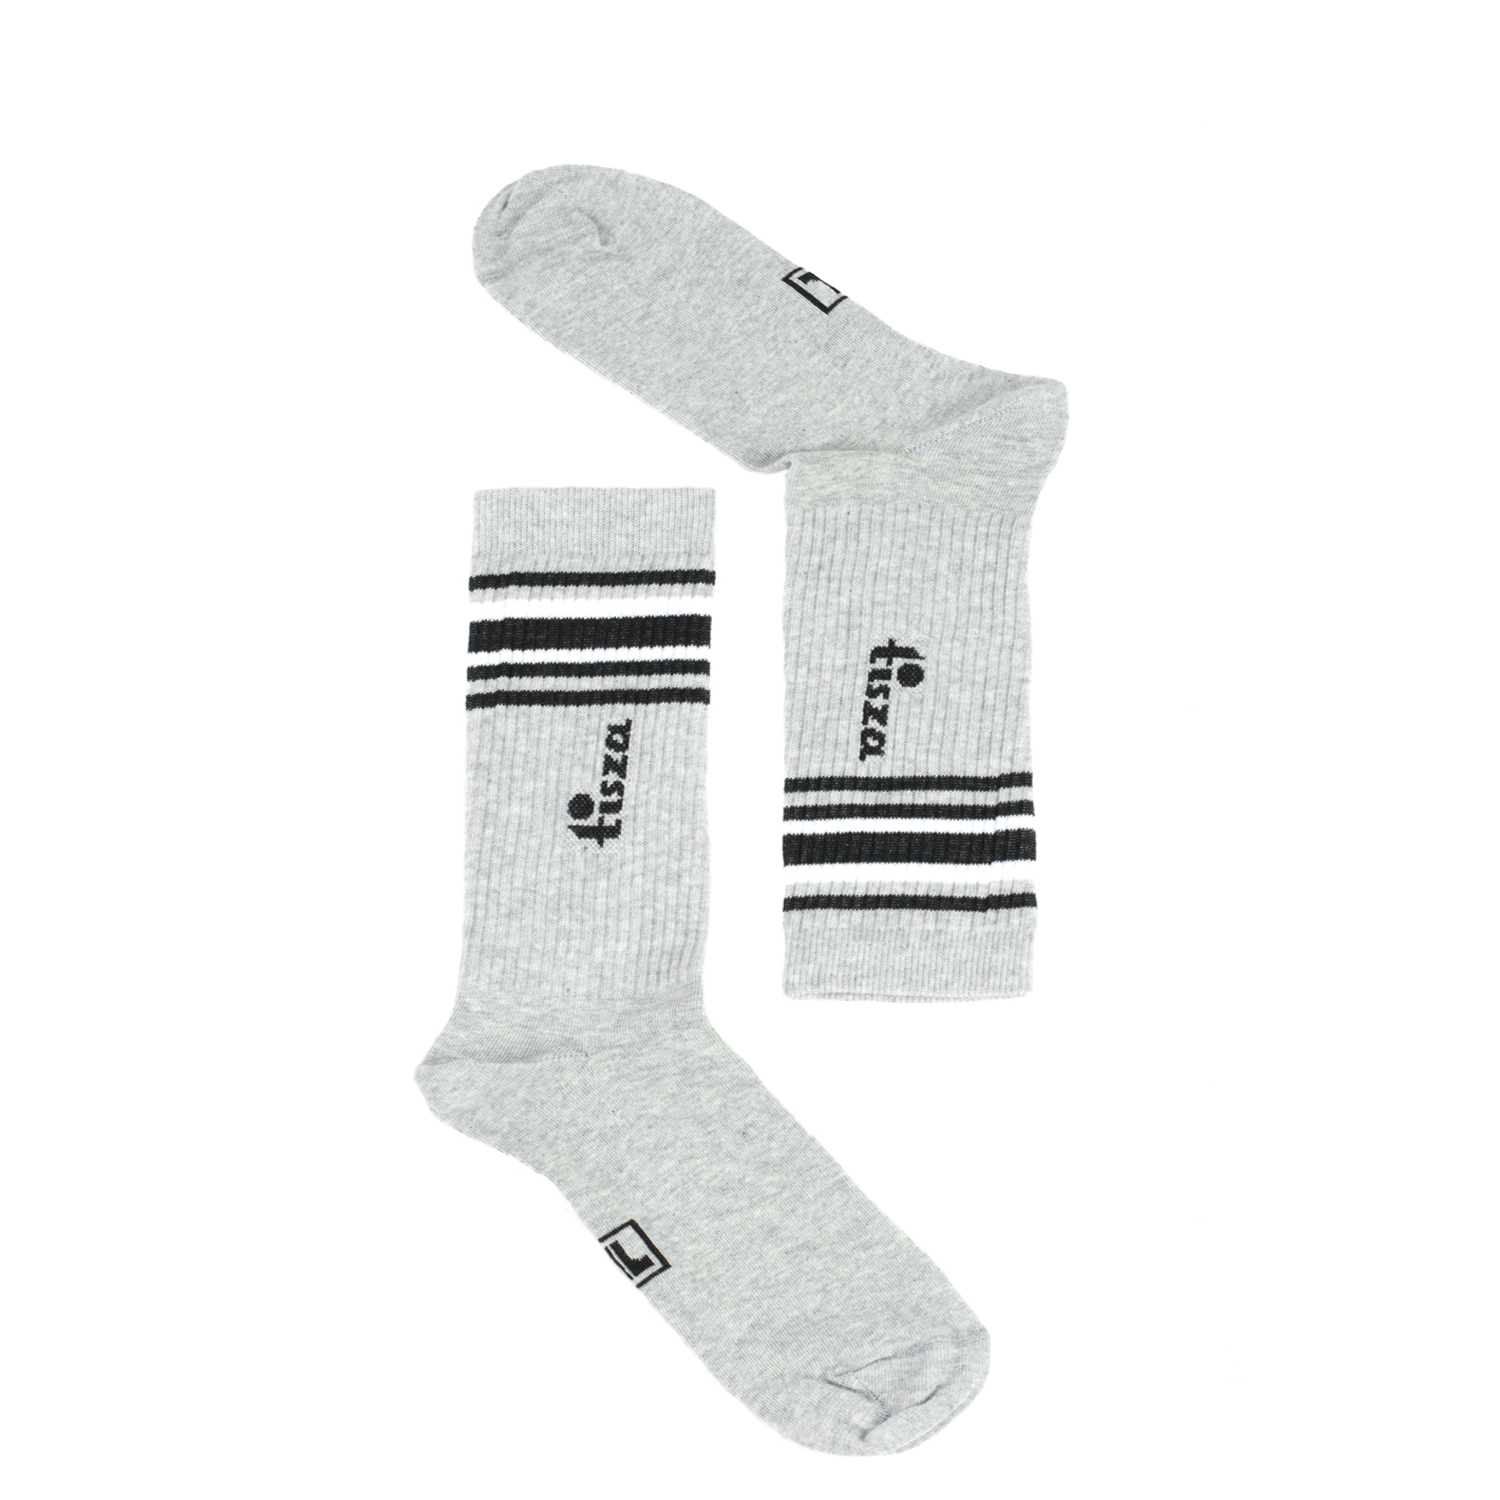 Tisza Shoes - Socks - grey-black-white